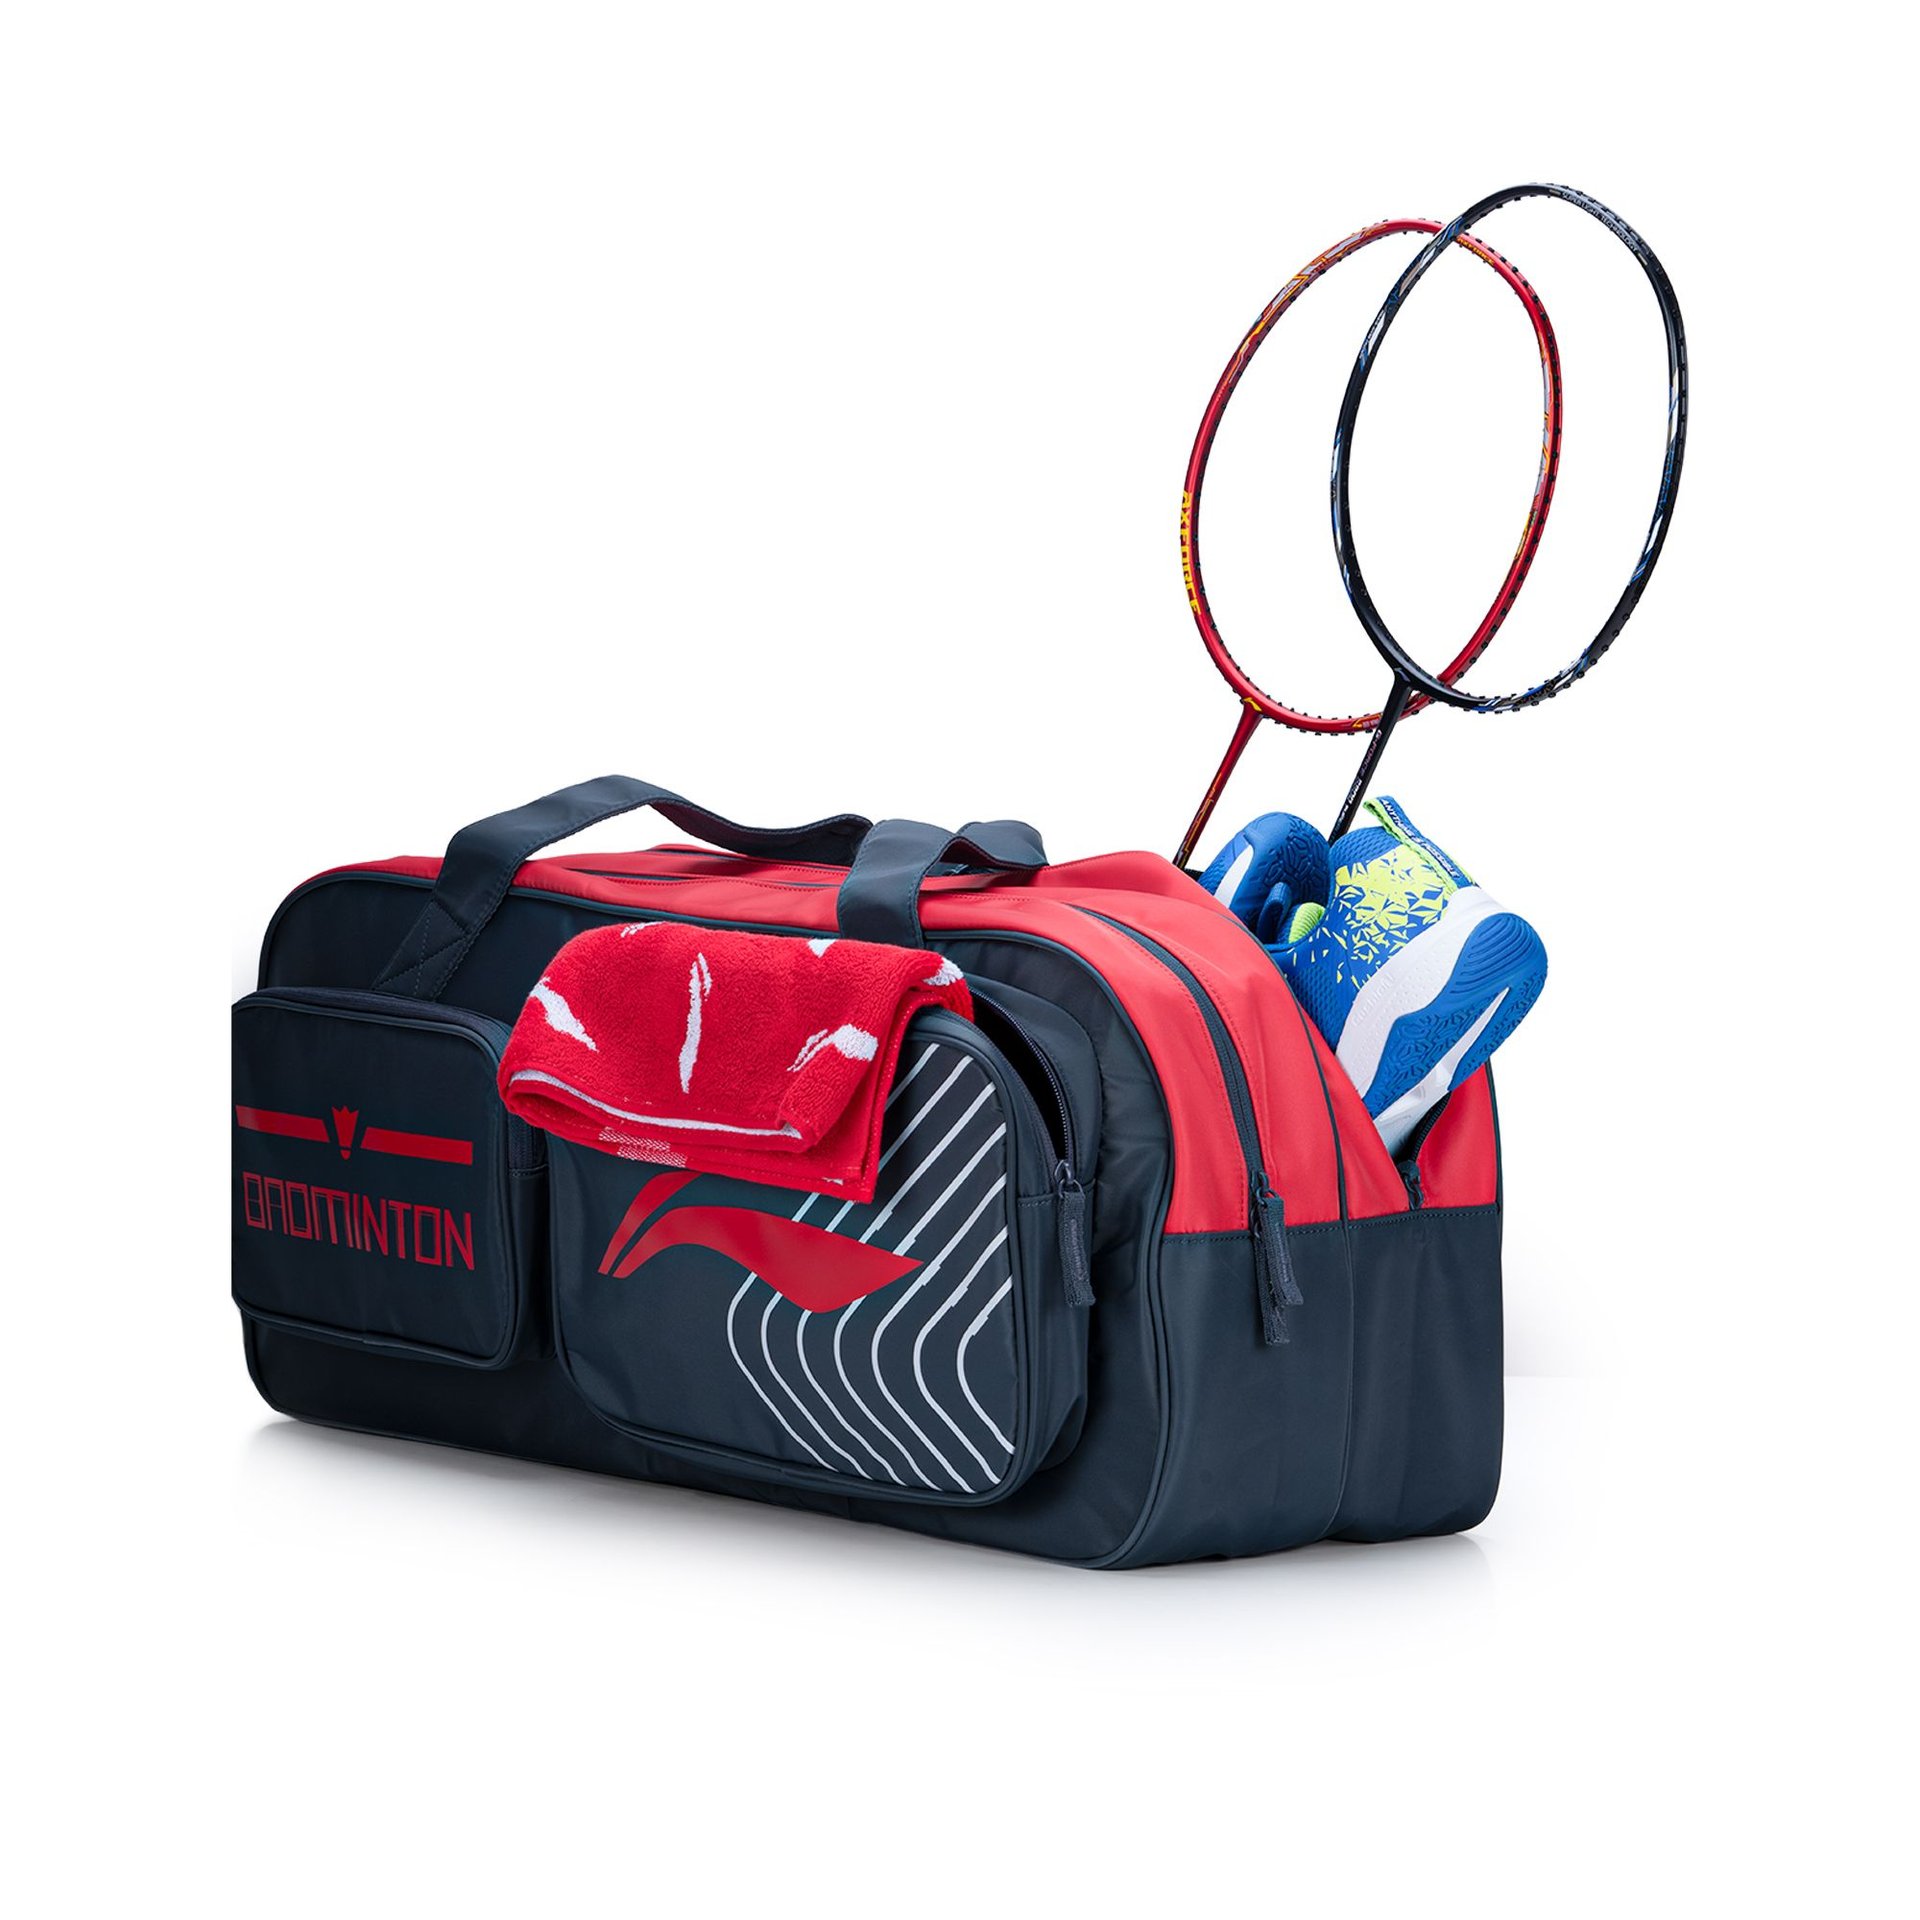 Qube Badminton Kit Bag - Spacious Compartments